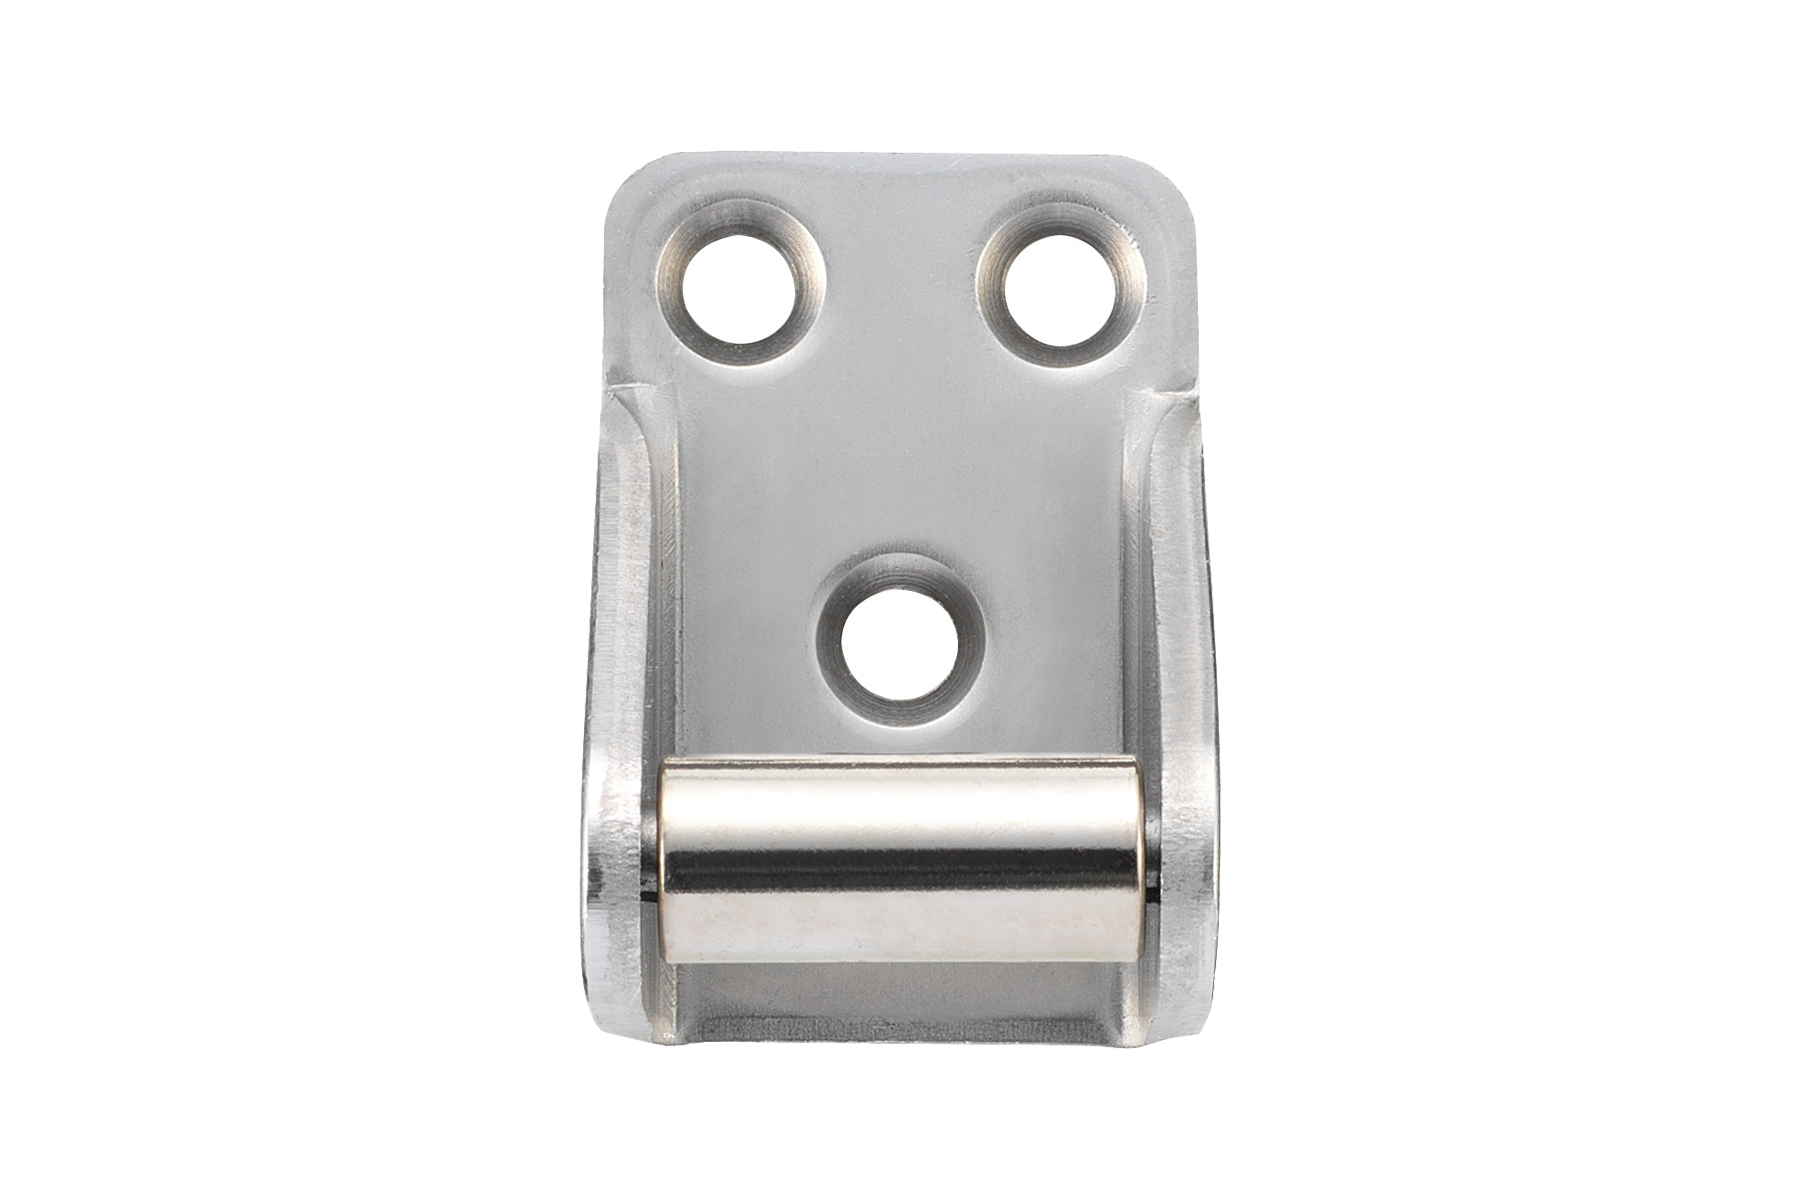 KWS Roller block 1507 for door holder in finish 02 (steel, silver stove-enamelled)